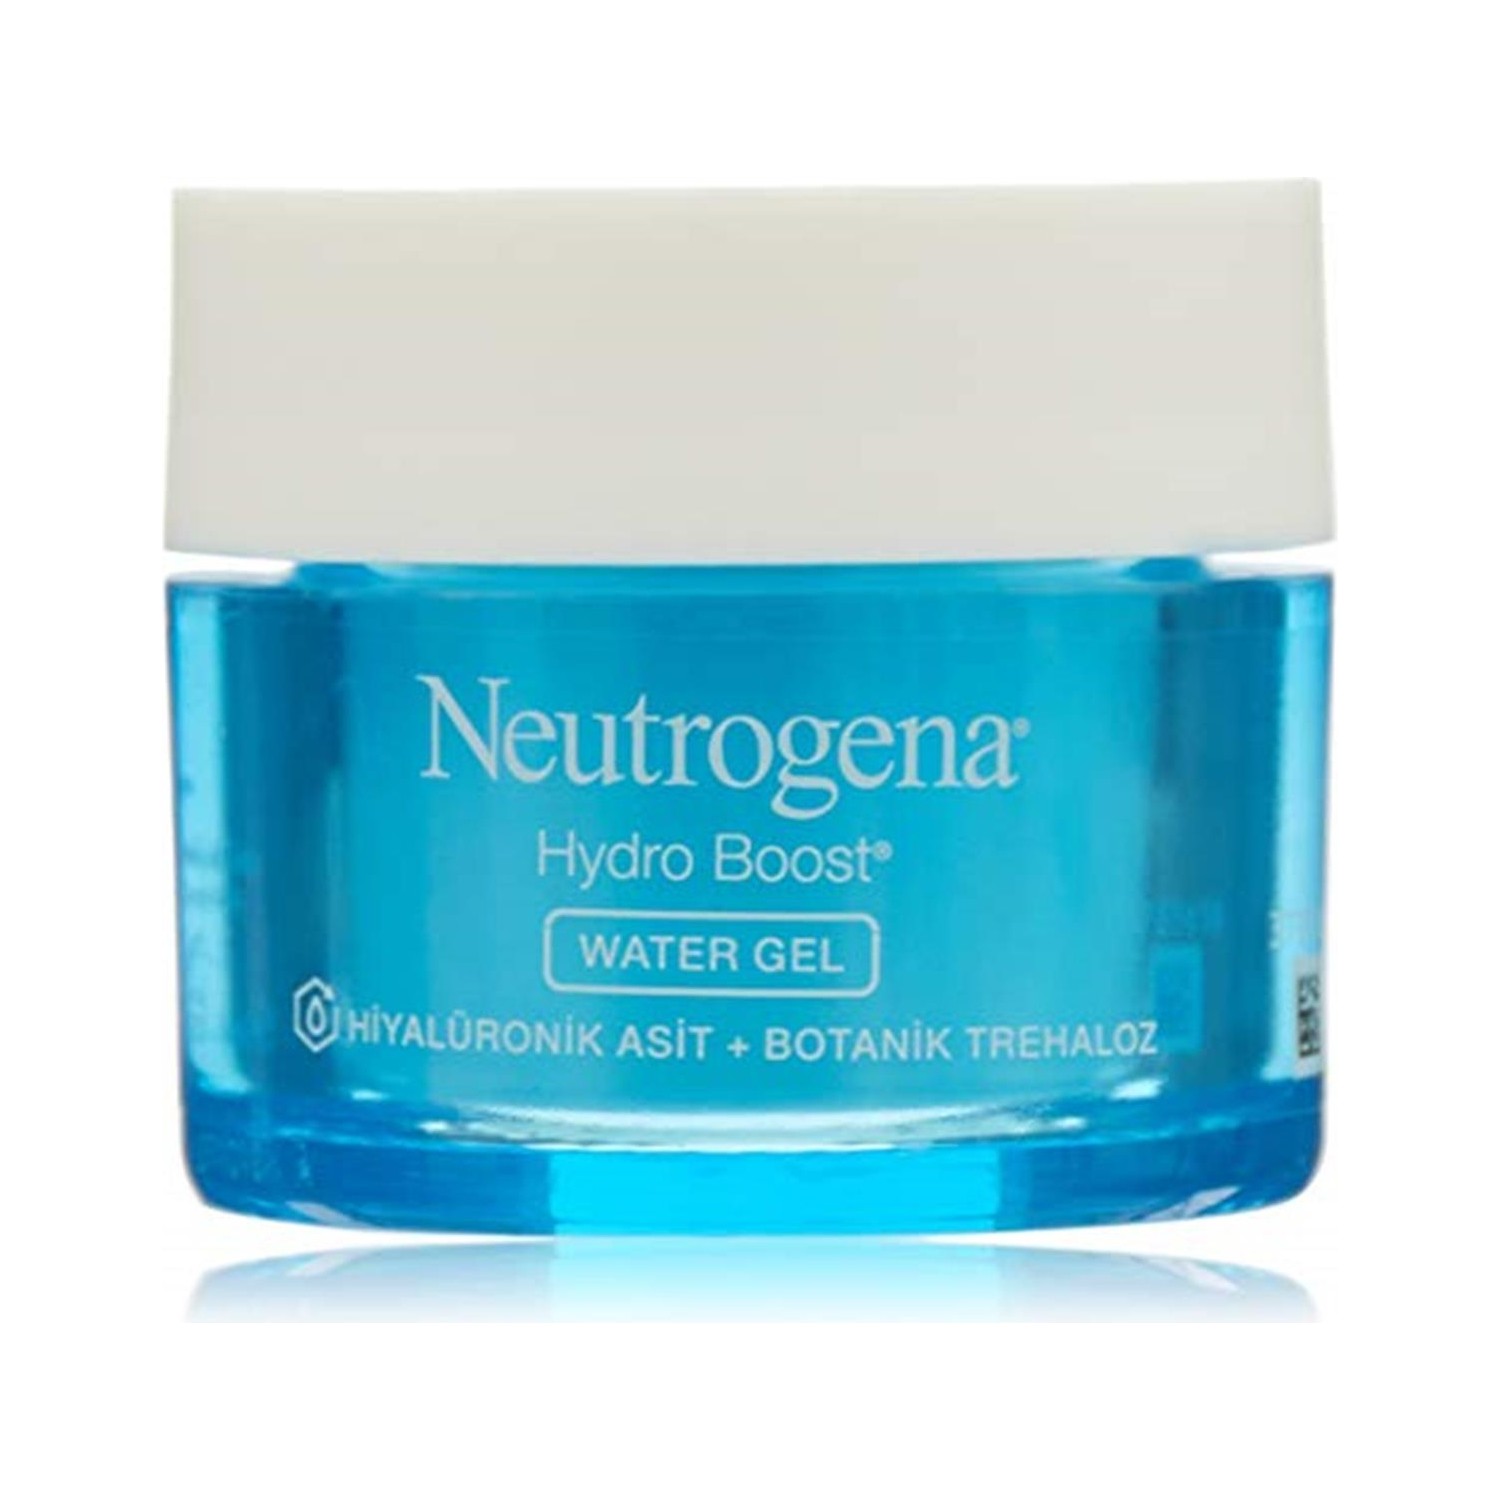 Гель увлажняющий Neutrogena Hydro Boost Water Gel для нормальной кожи, 50 мл цена и фото